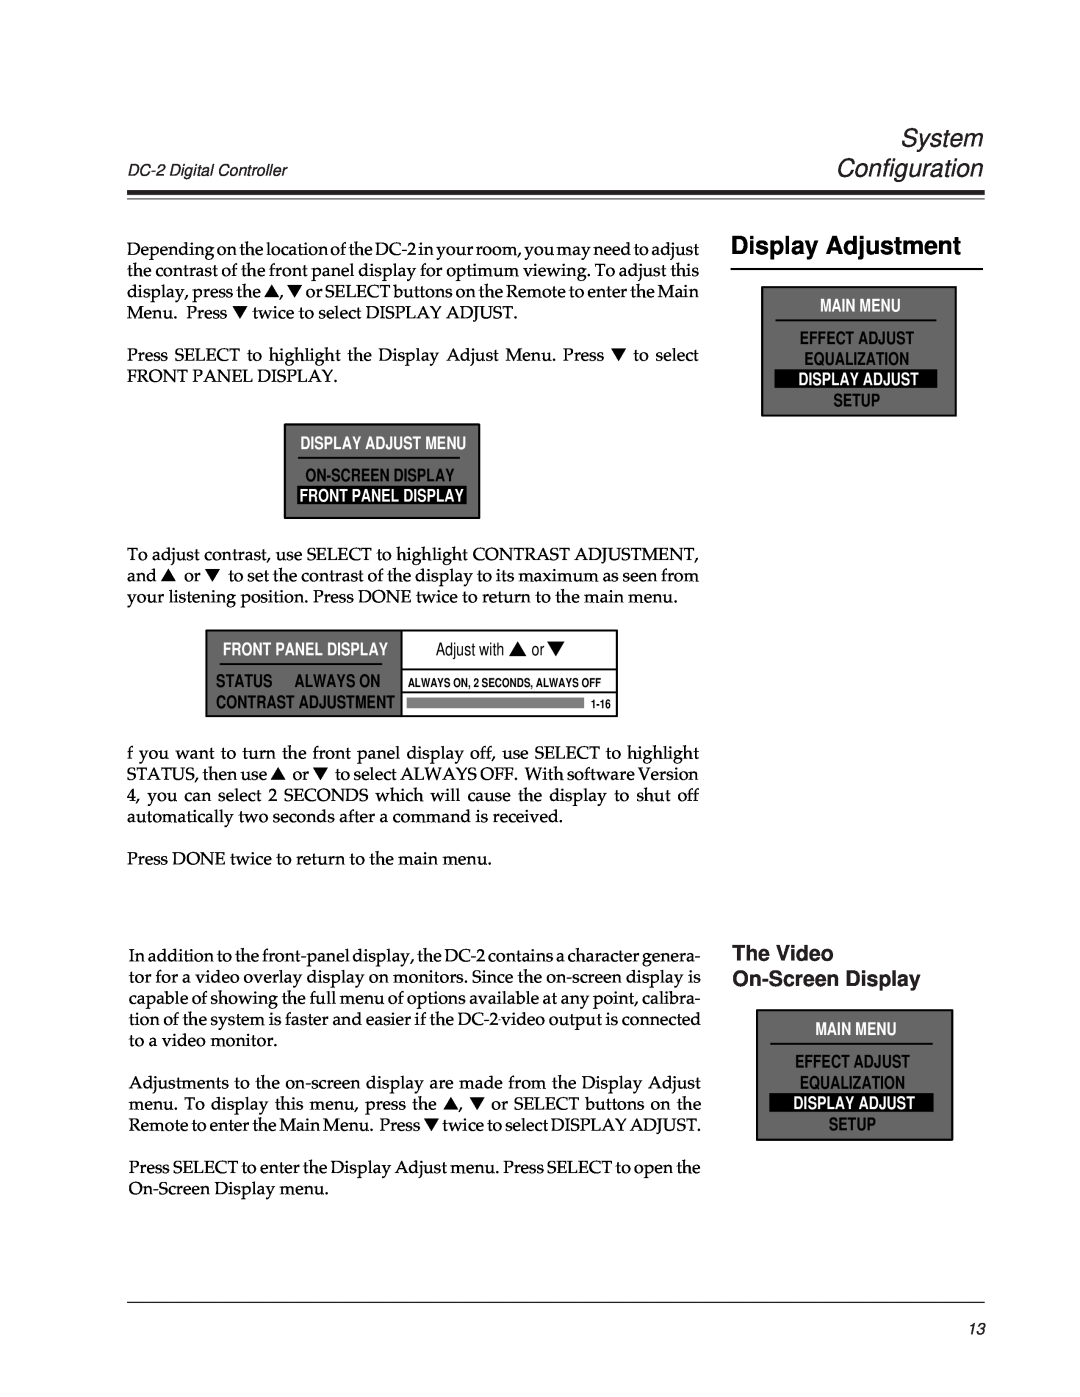 Lexicon DC-2 Display Adjustment, The Video On-ScreenDisplay, System Configuration, Display Adjust Menu, On-Screendisplay 